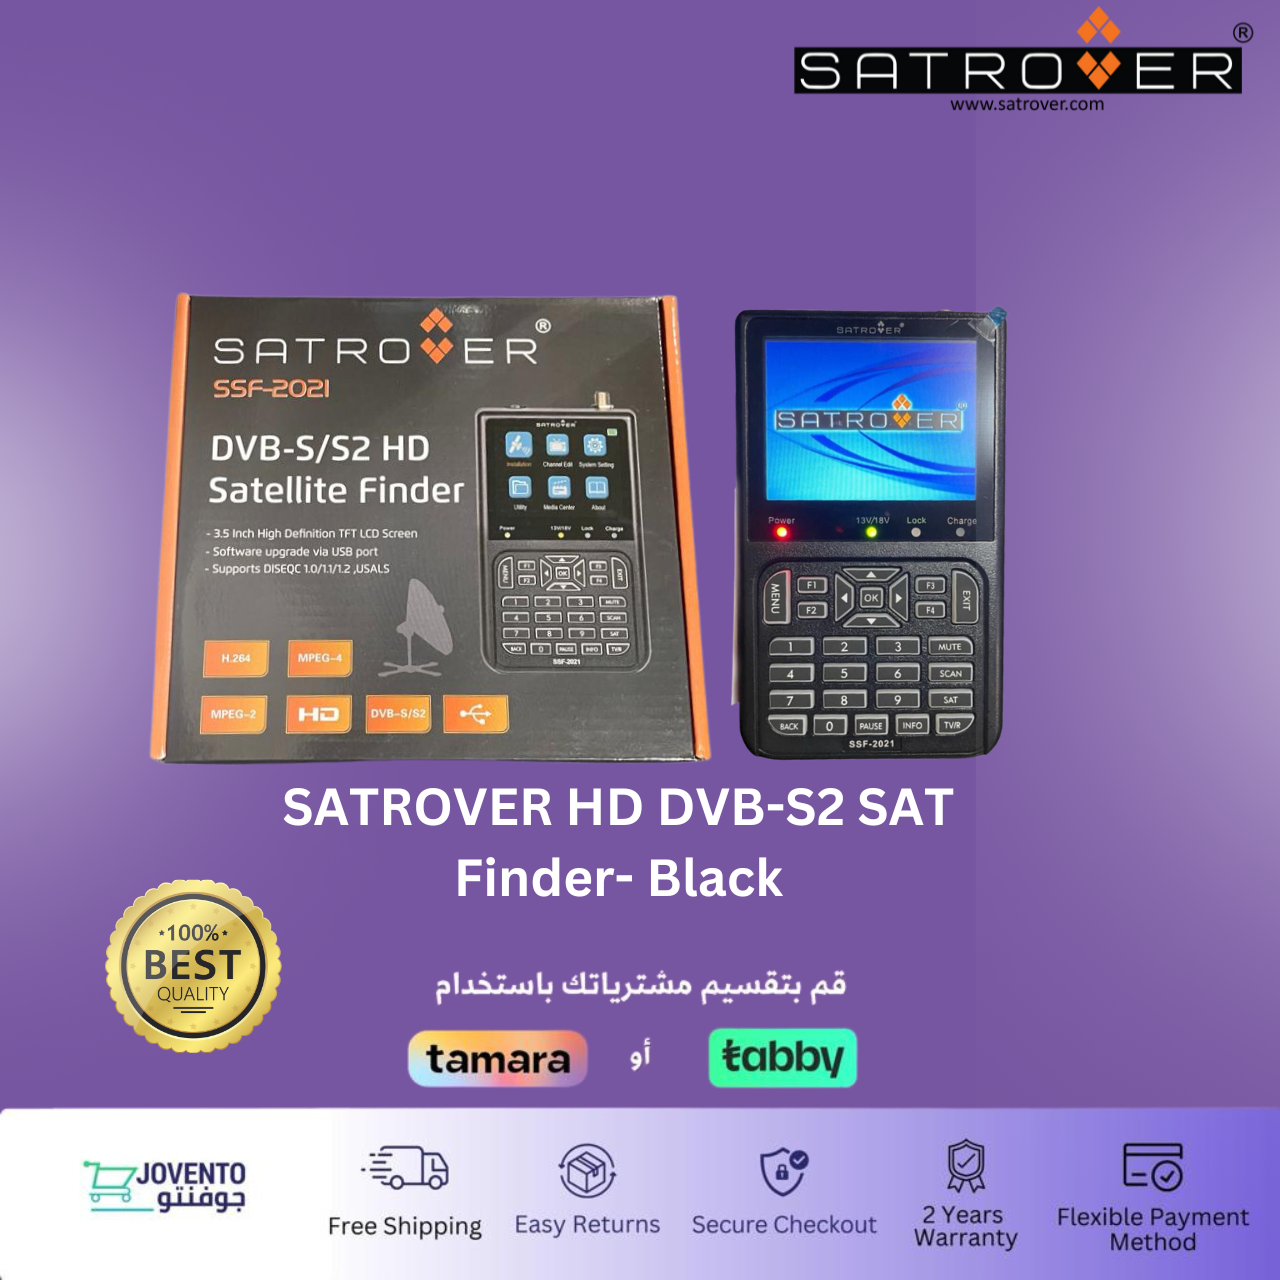 SATROVER HD DVB-S2 SAT Finder - Black